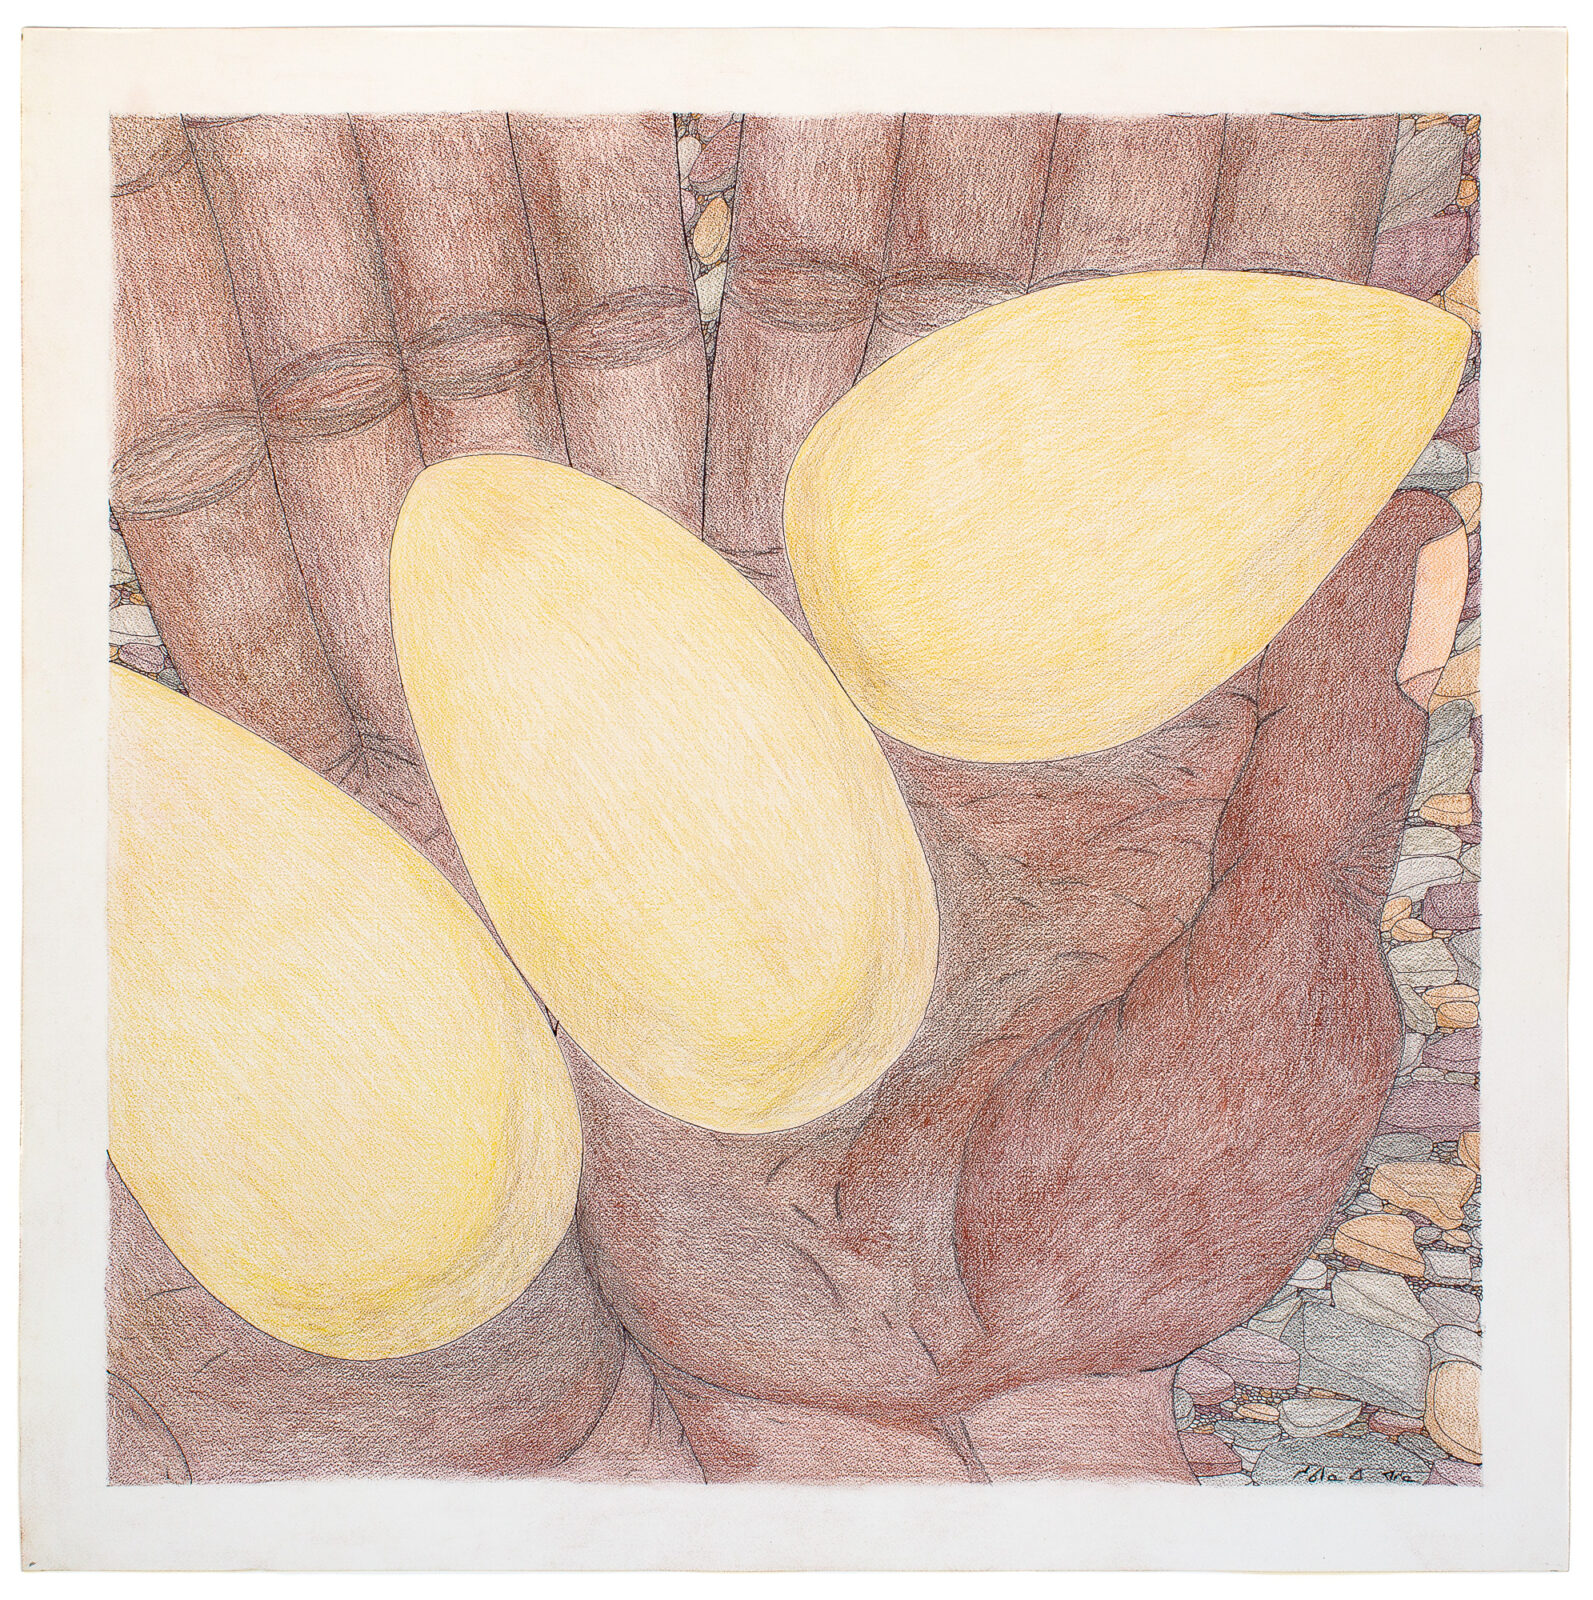 Shuvinai Ashoona - untitled (hands with eggs)